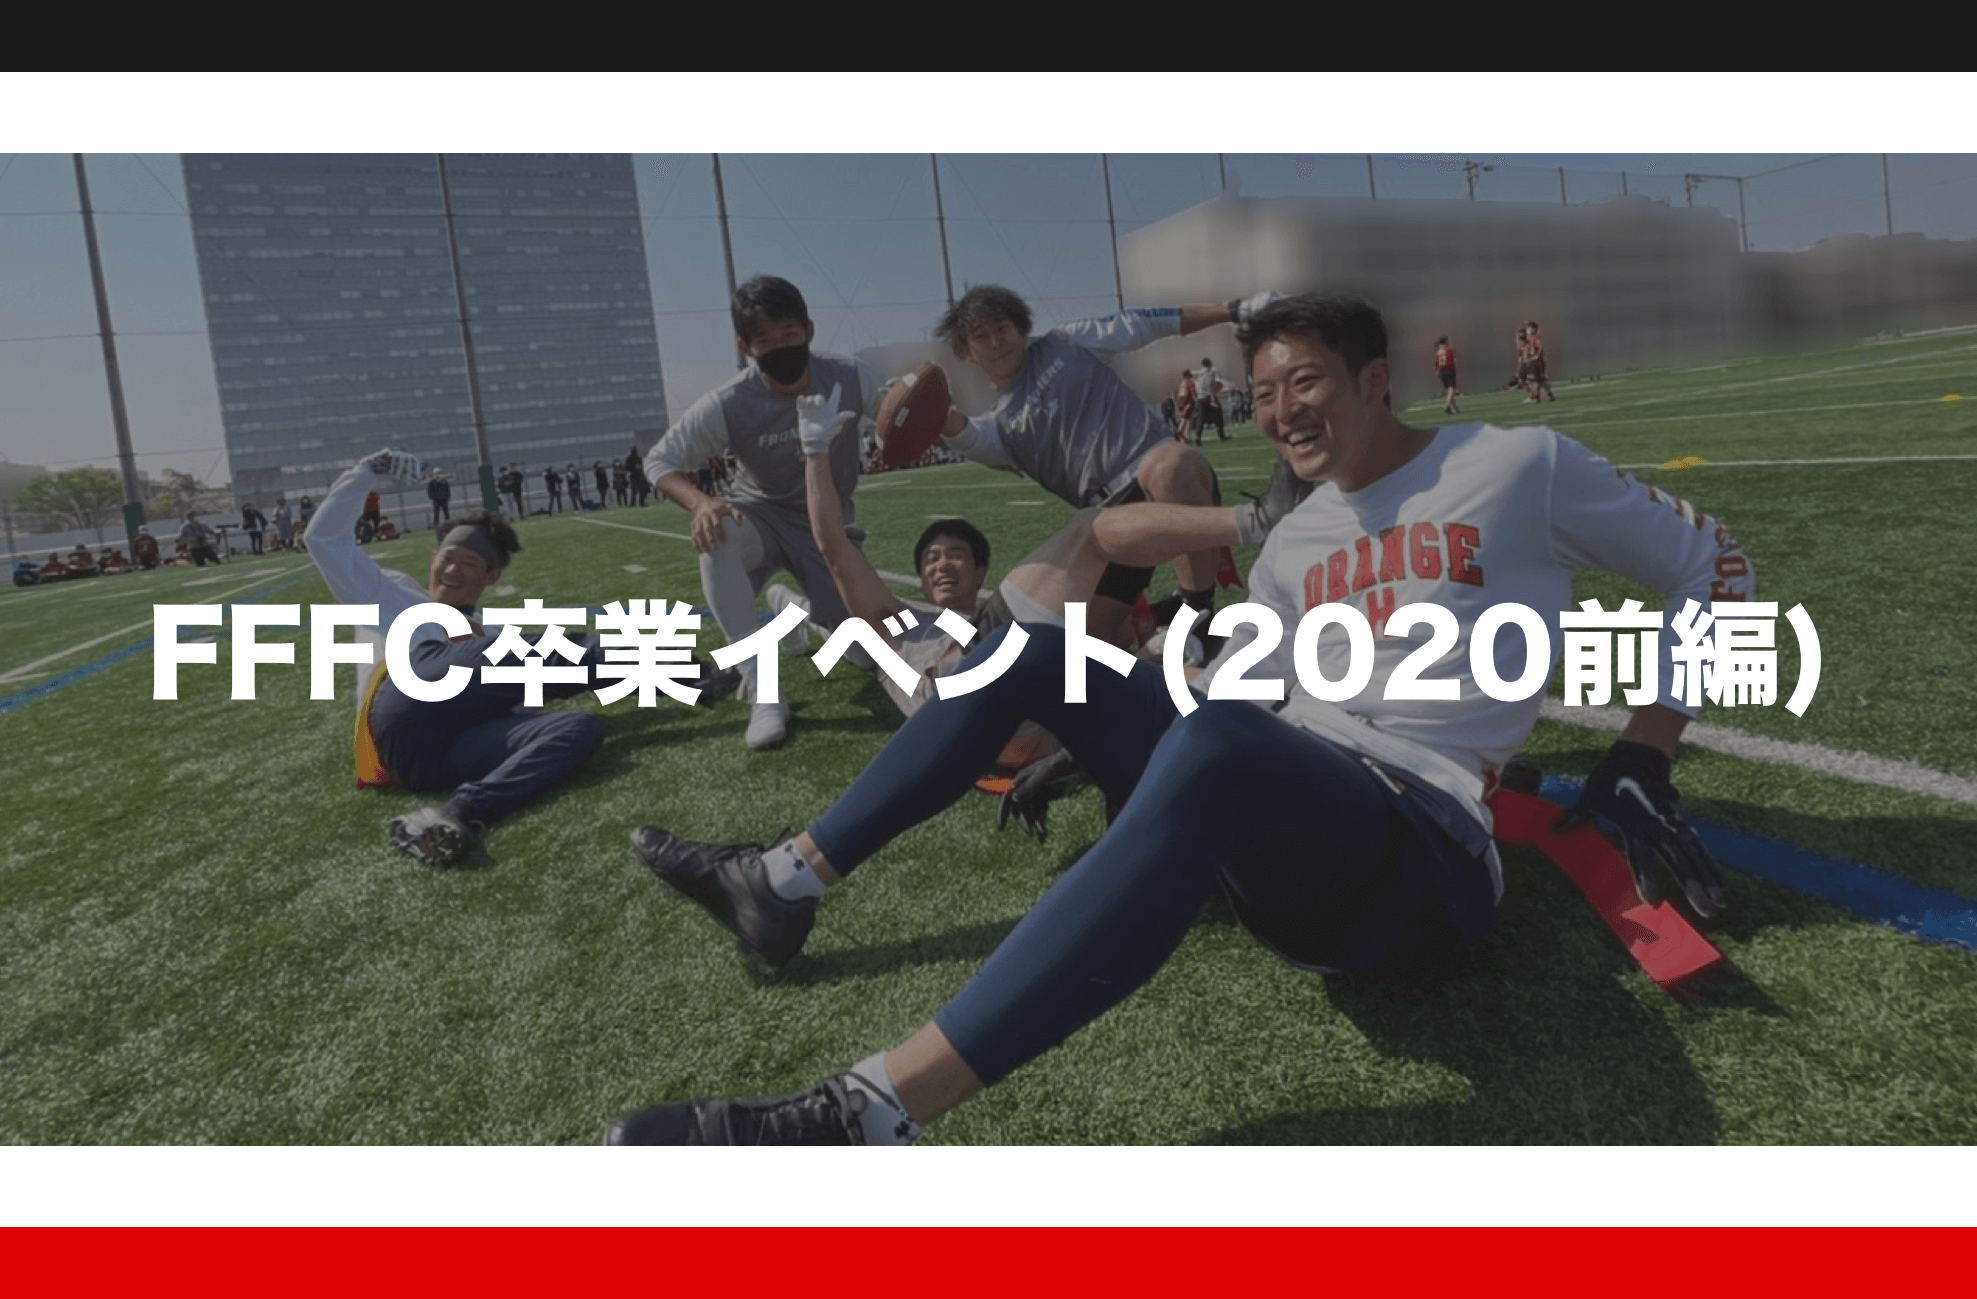 FFFC卒業イベント(2020前編)